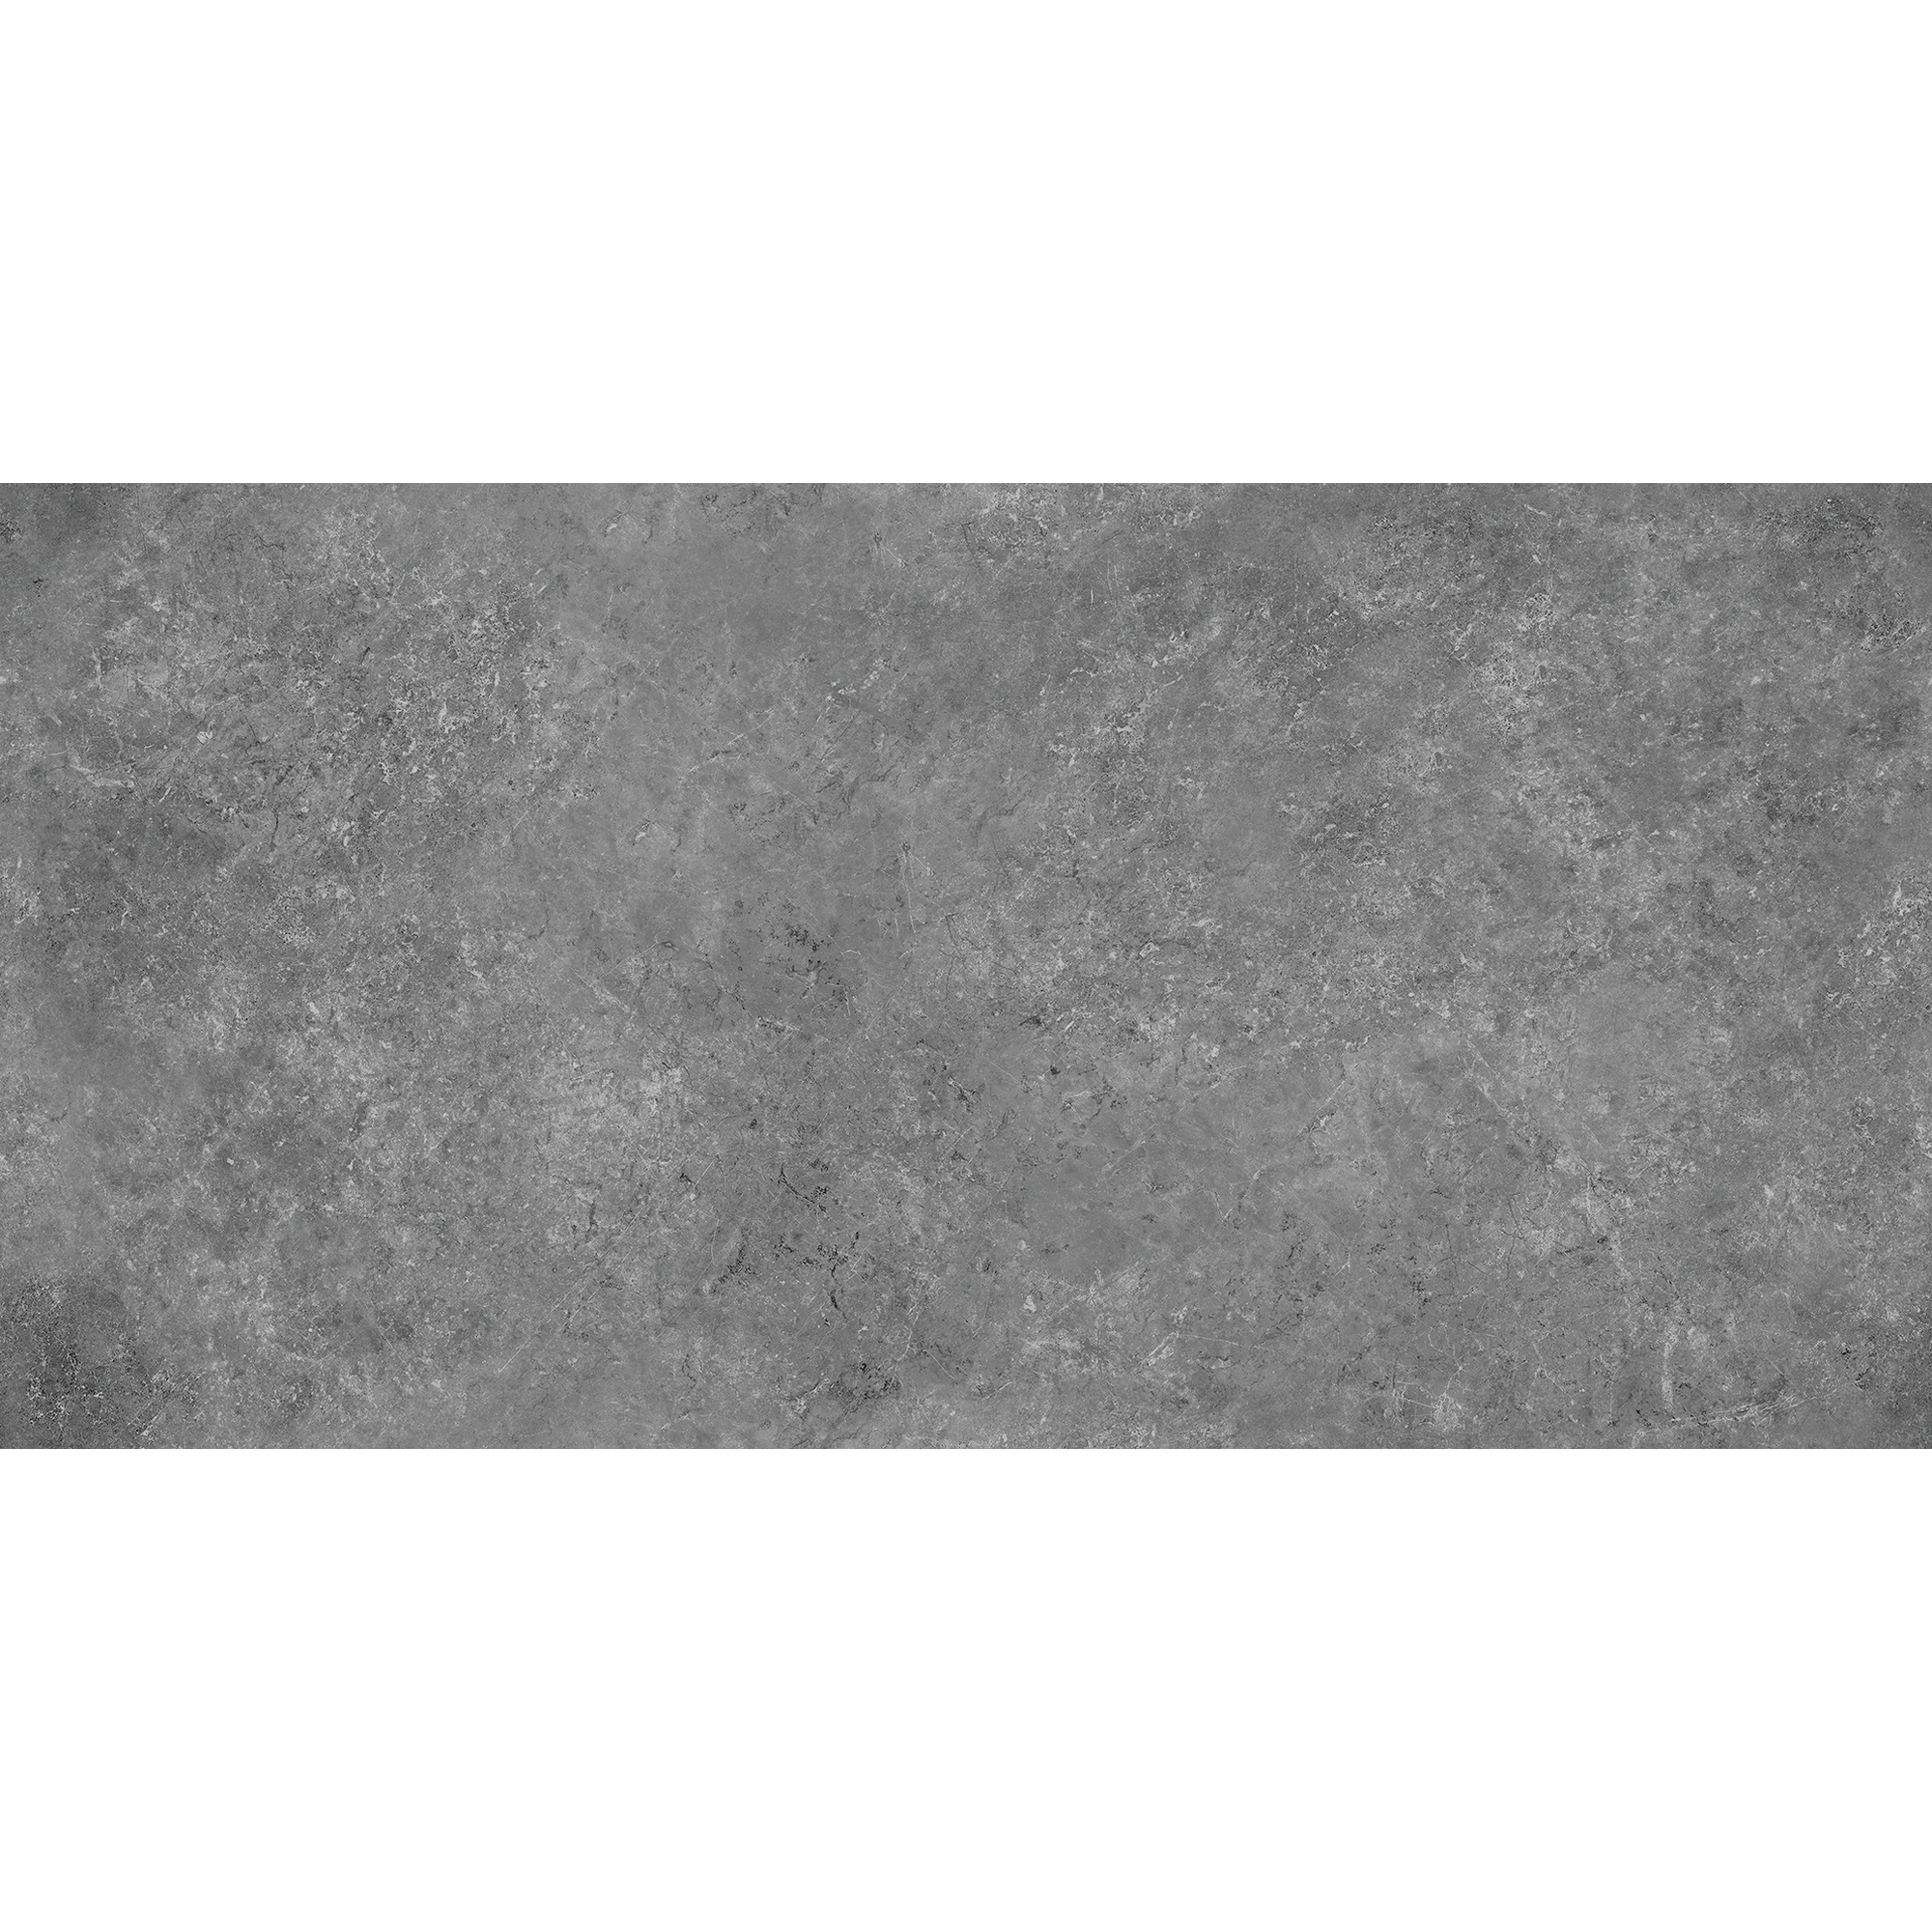 Bodenfliese 'Huston' Feinsteinzeug dunkelgrau 30 x 60 cm + product picture